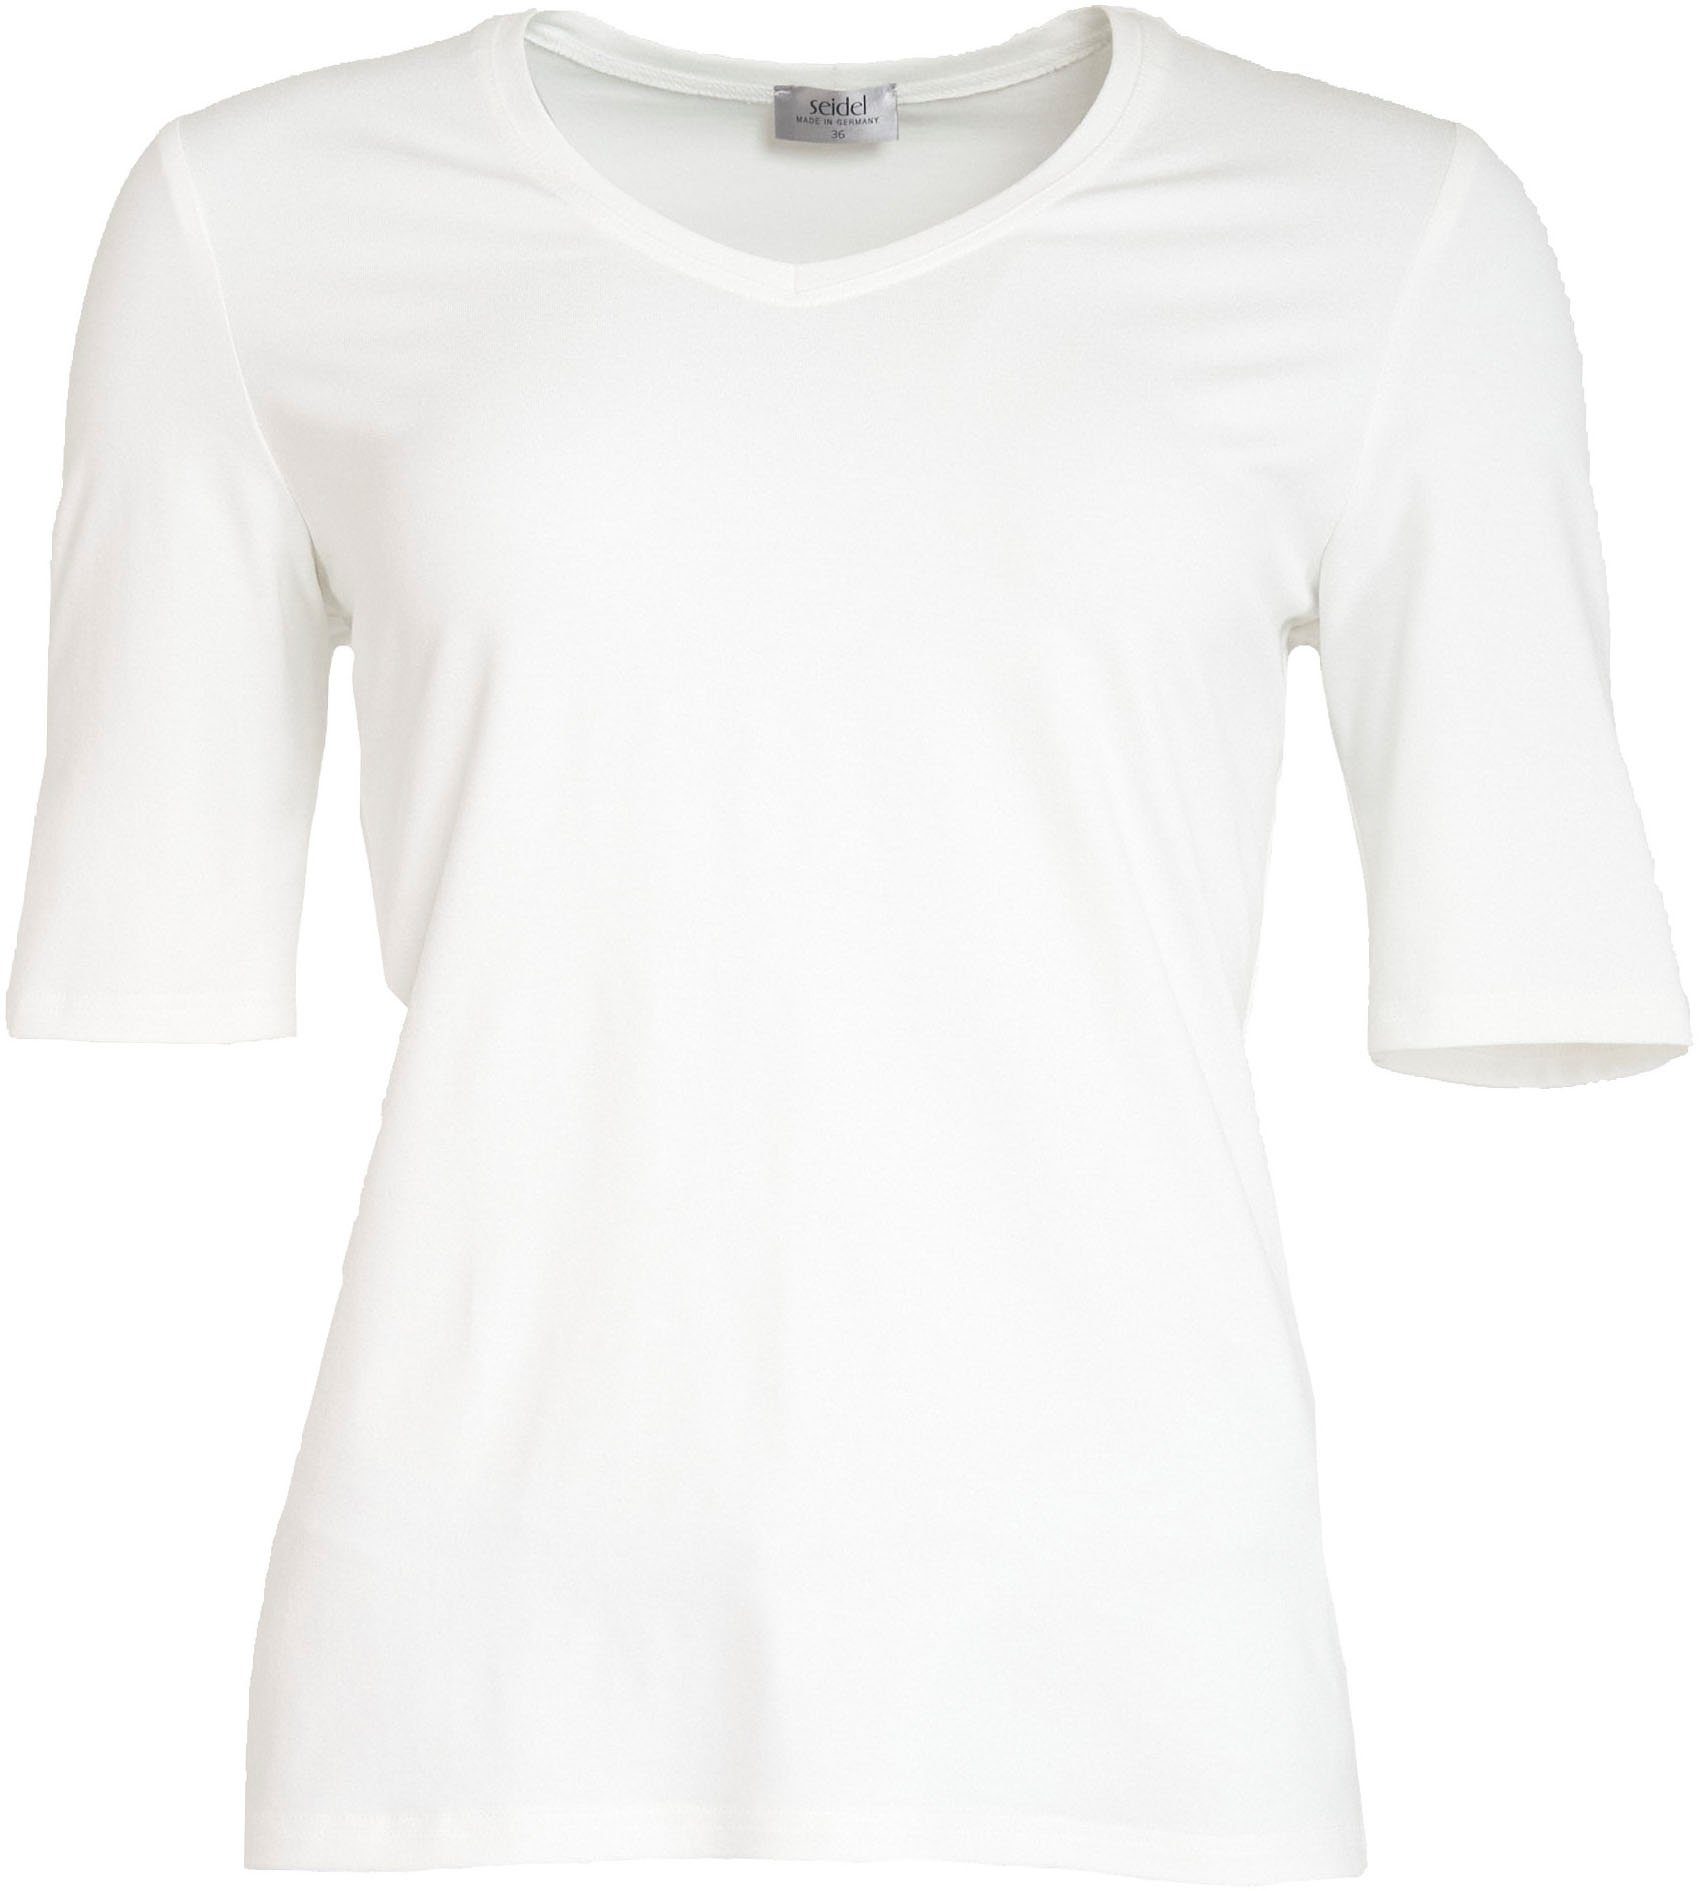 Seidel Moden V-Shirt mit MADE IN Halbarm Material, offwhite softem GERMANY aus